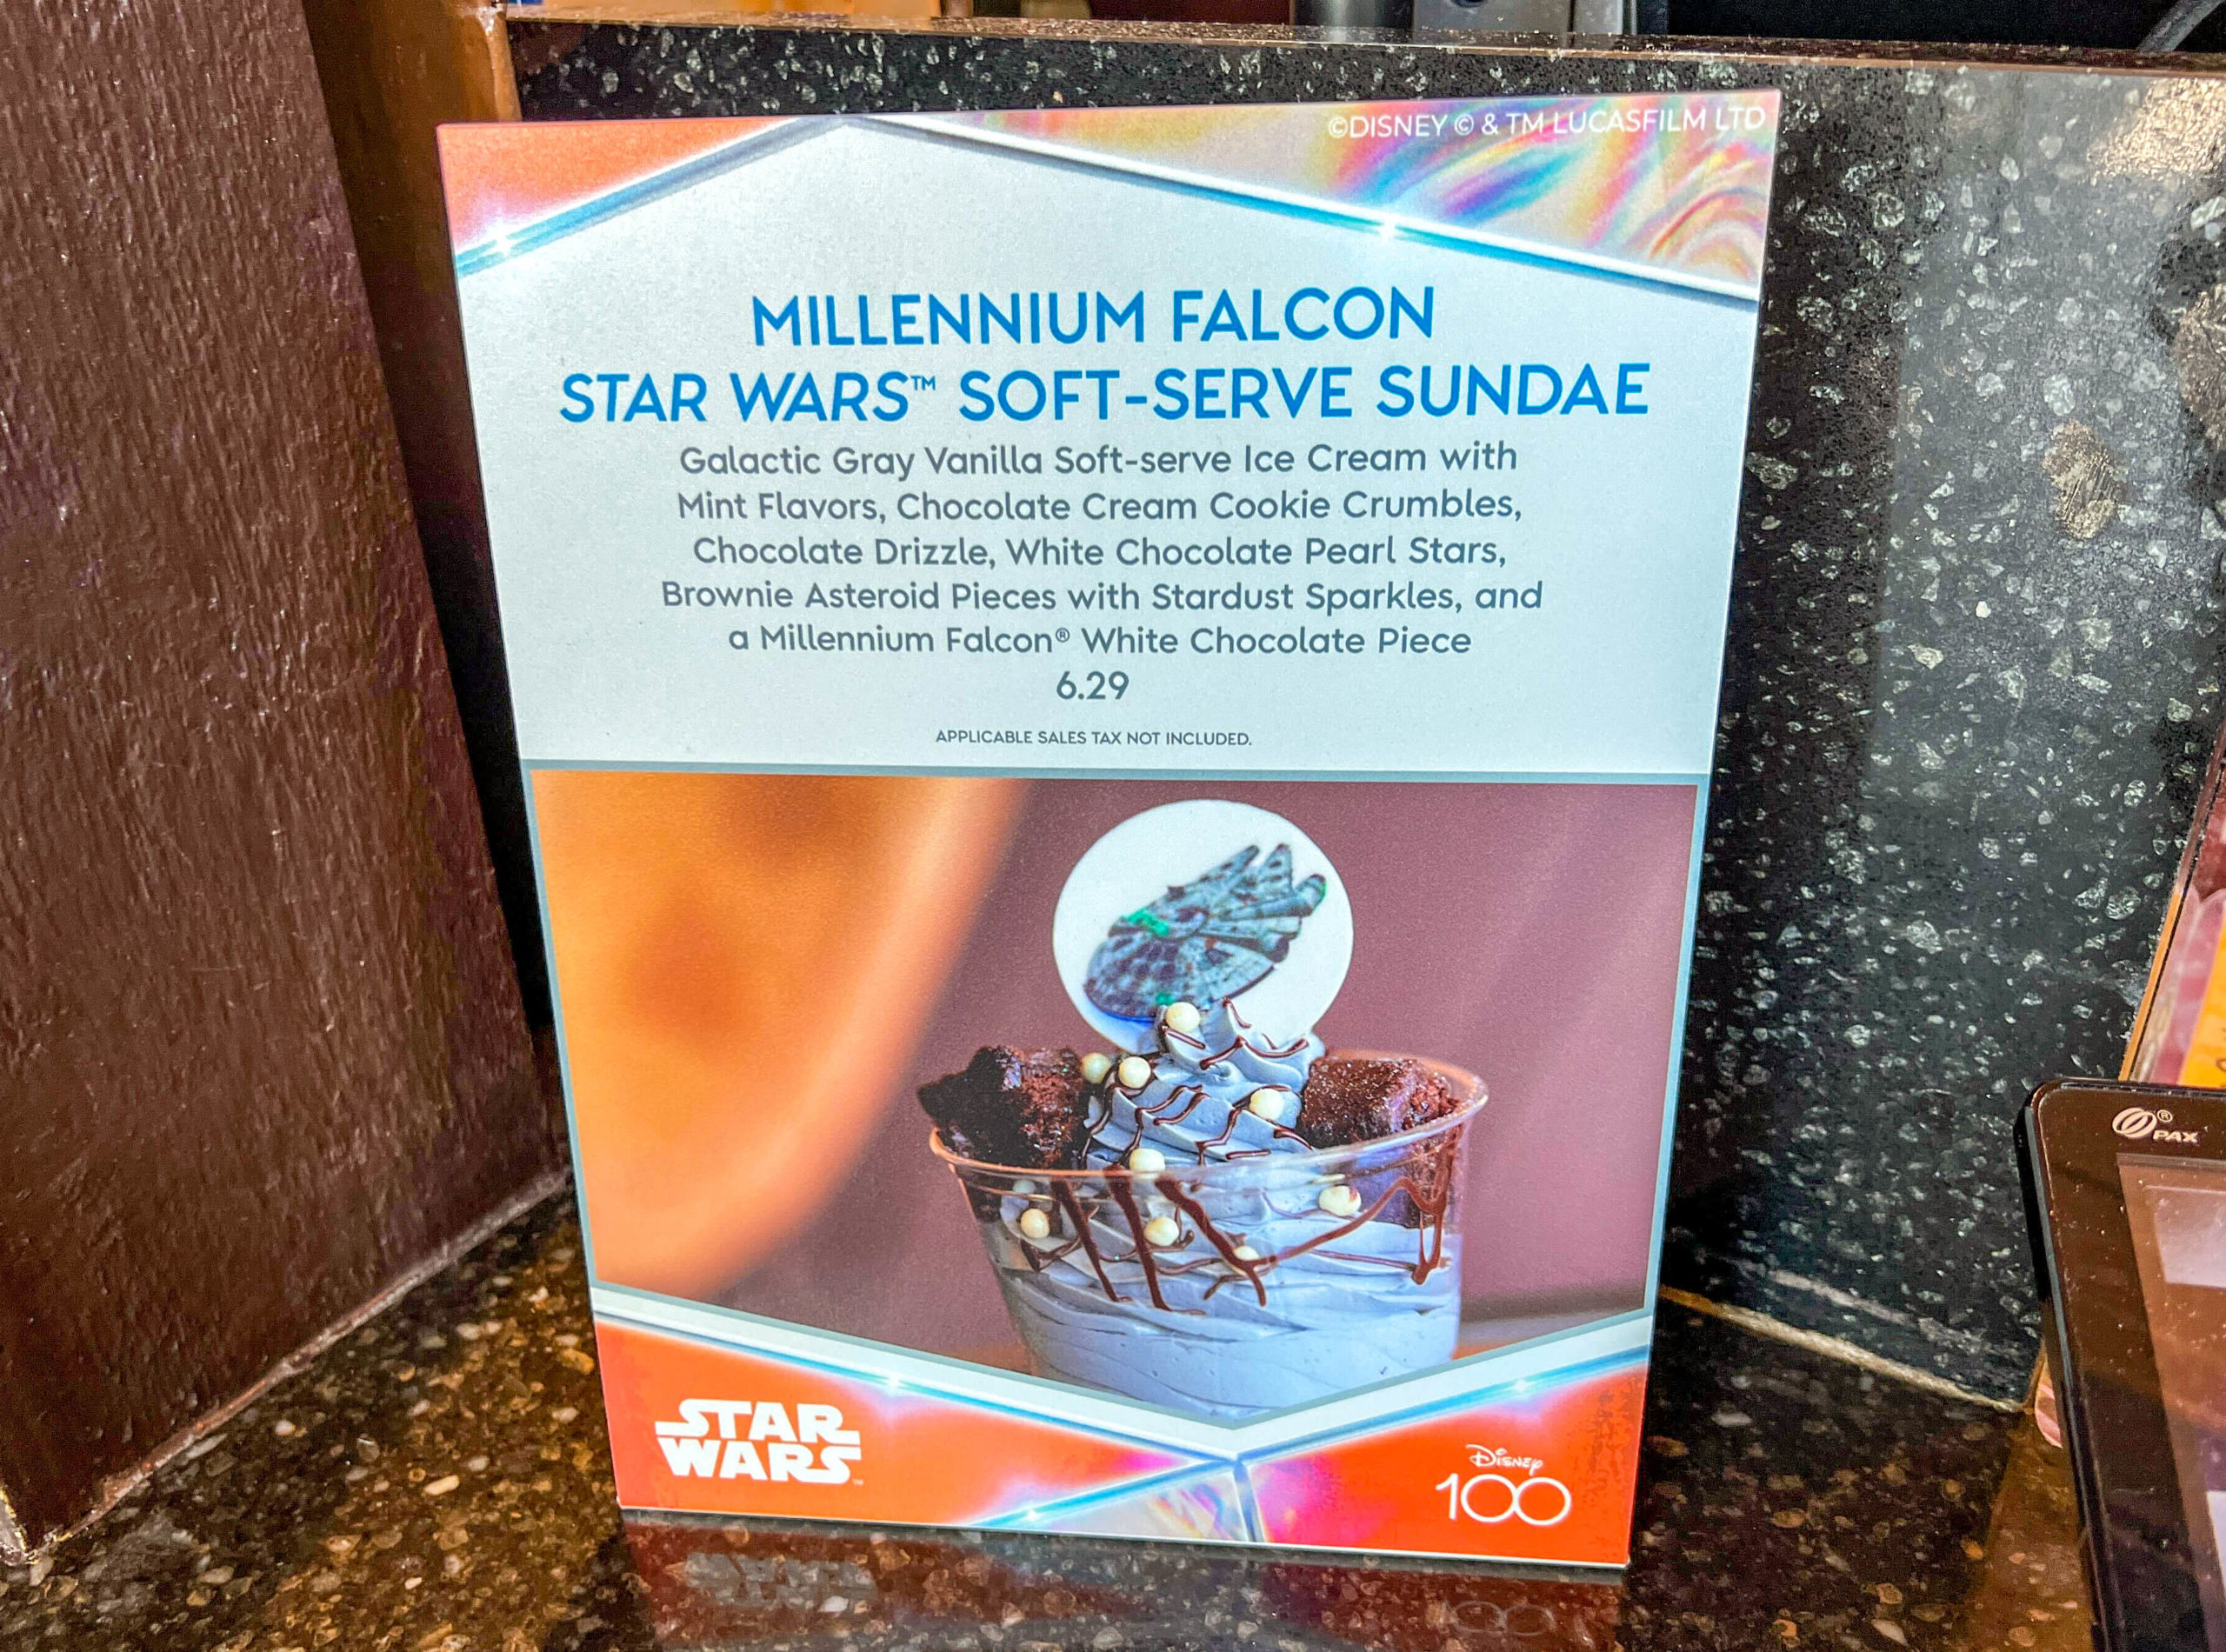 Millennium Falcon Star Wars Soft-Serve Sundae